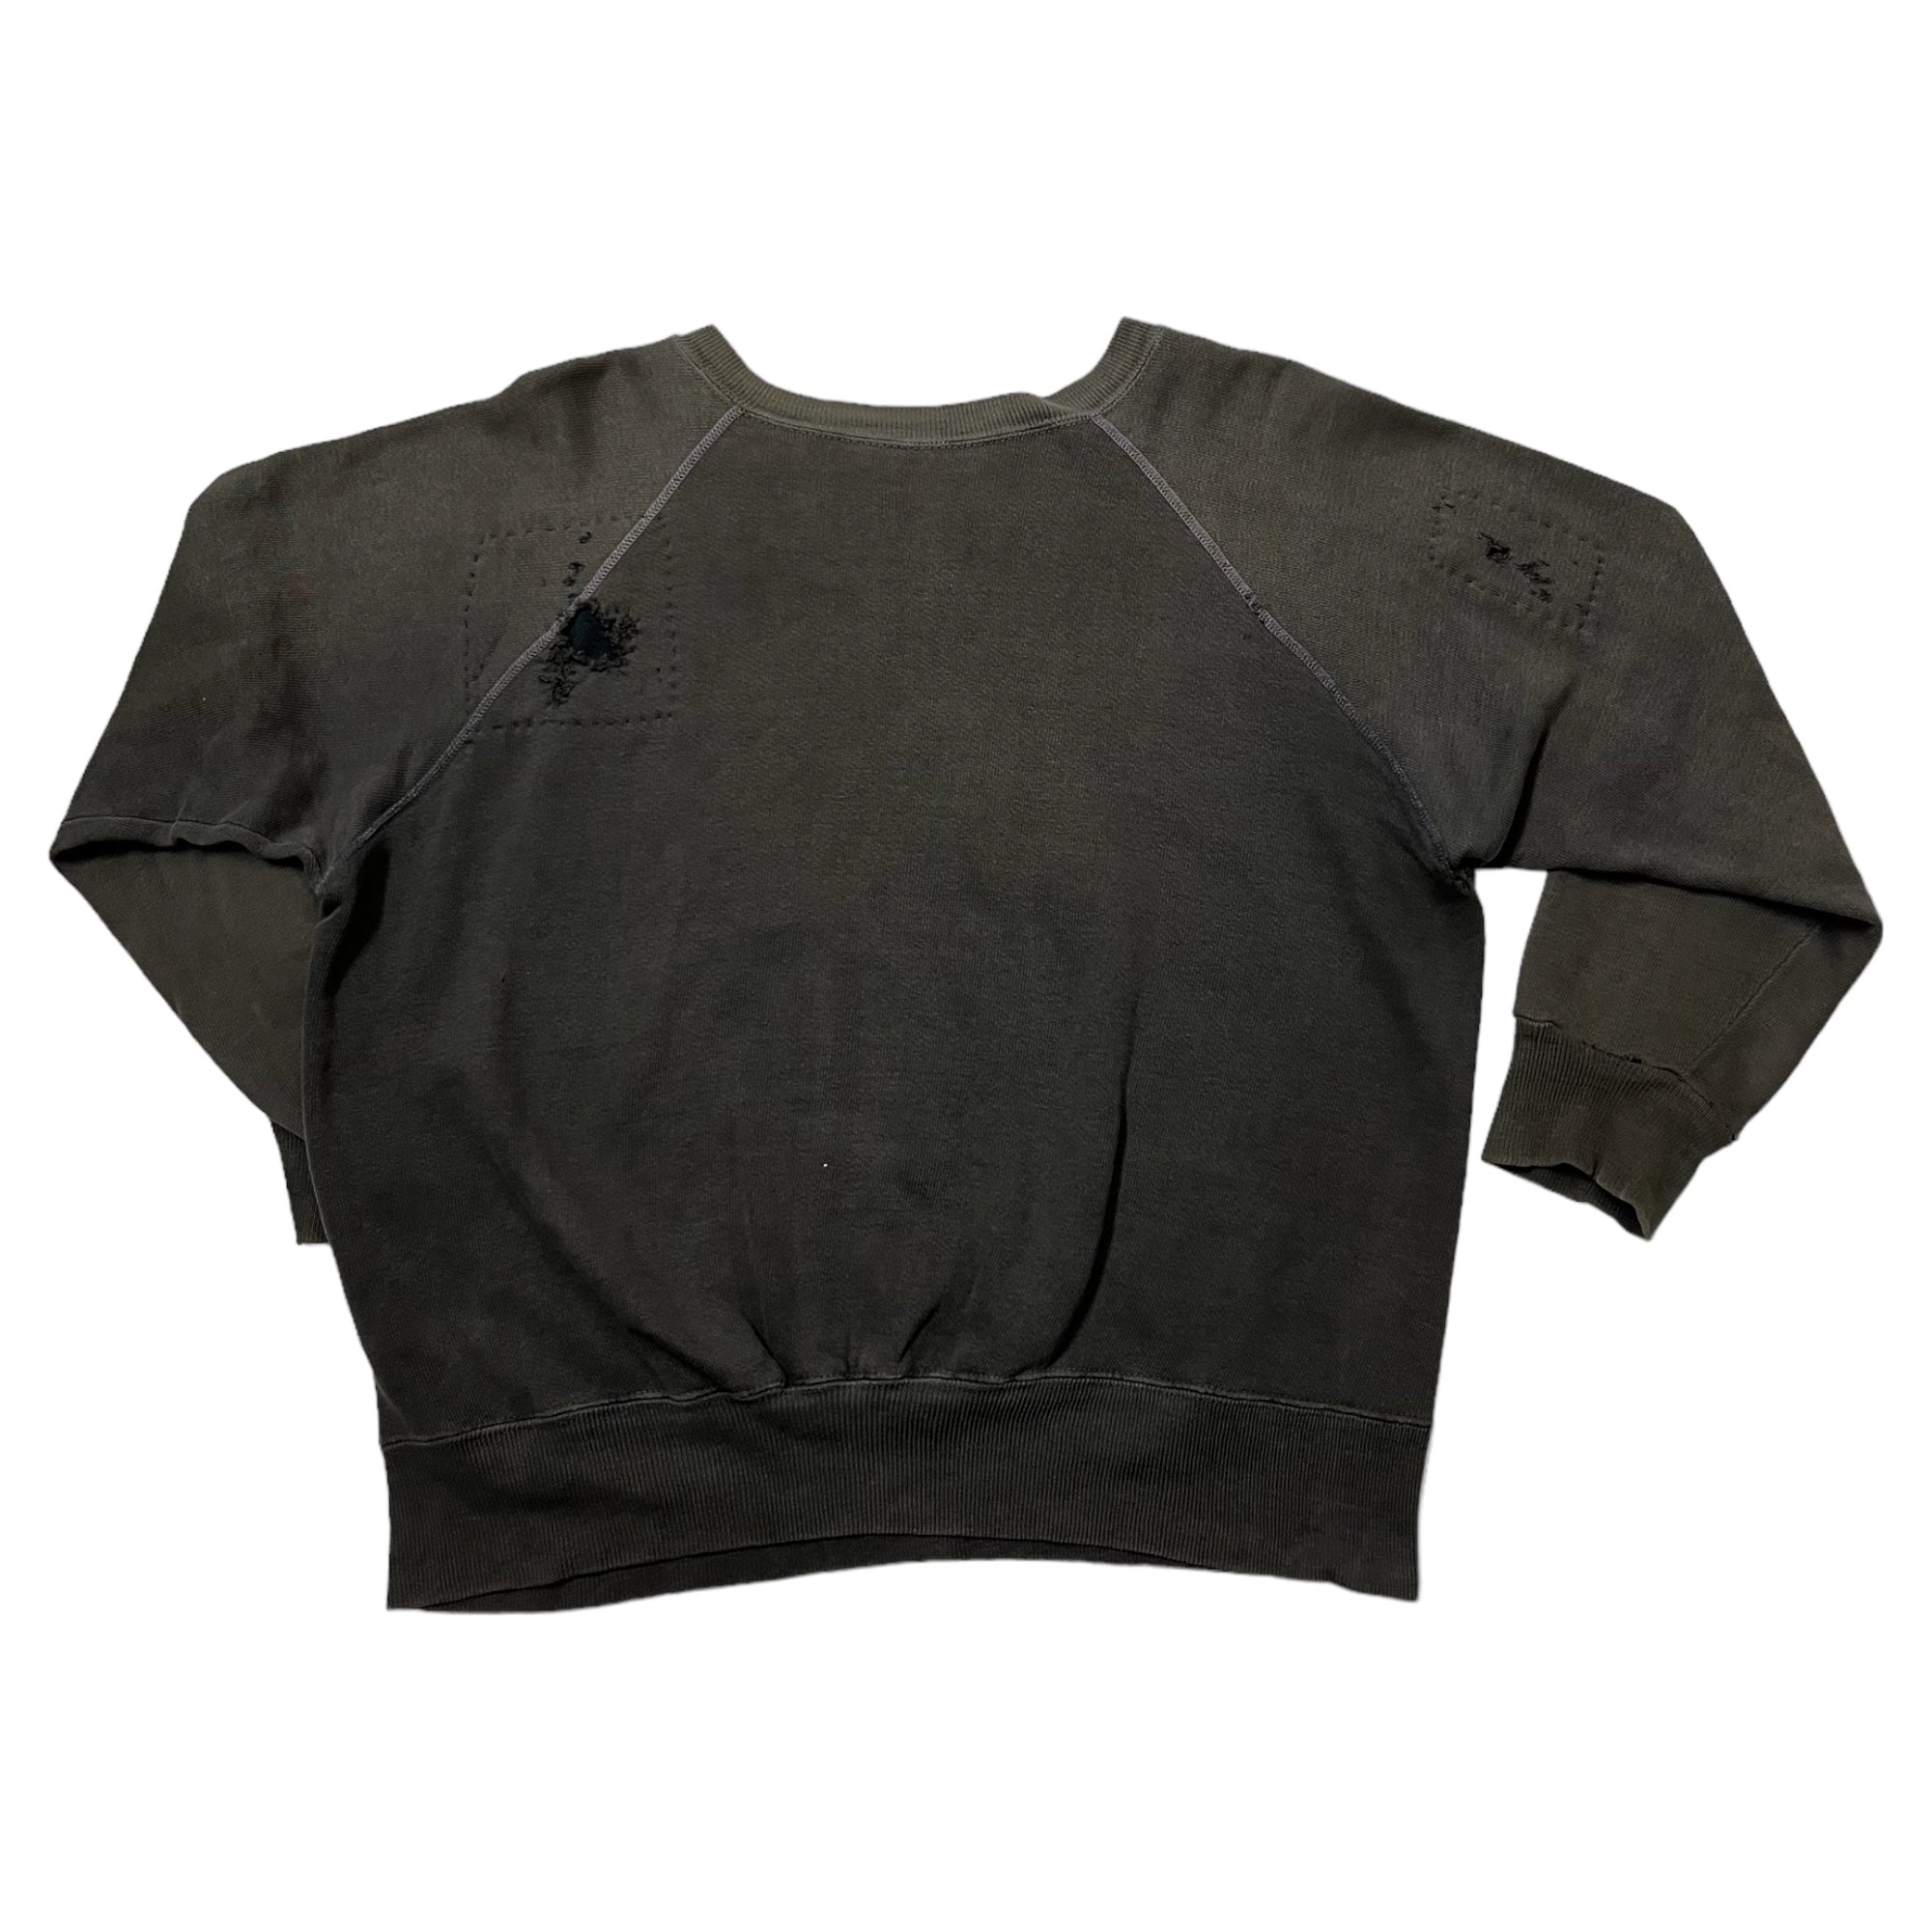 1960s Black ‘Steelers’ Graphic Raglan Crewneck Sweatshirt - Faded Black/Orange - L/XL